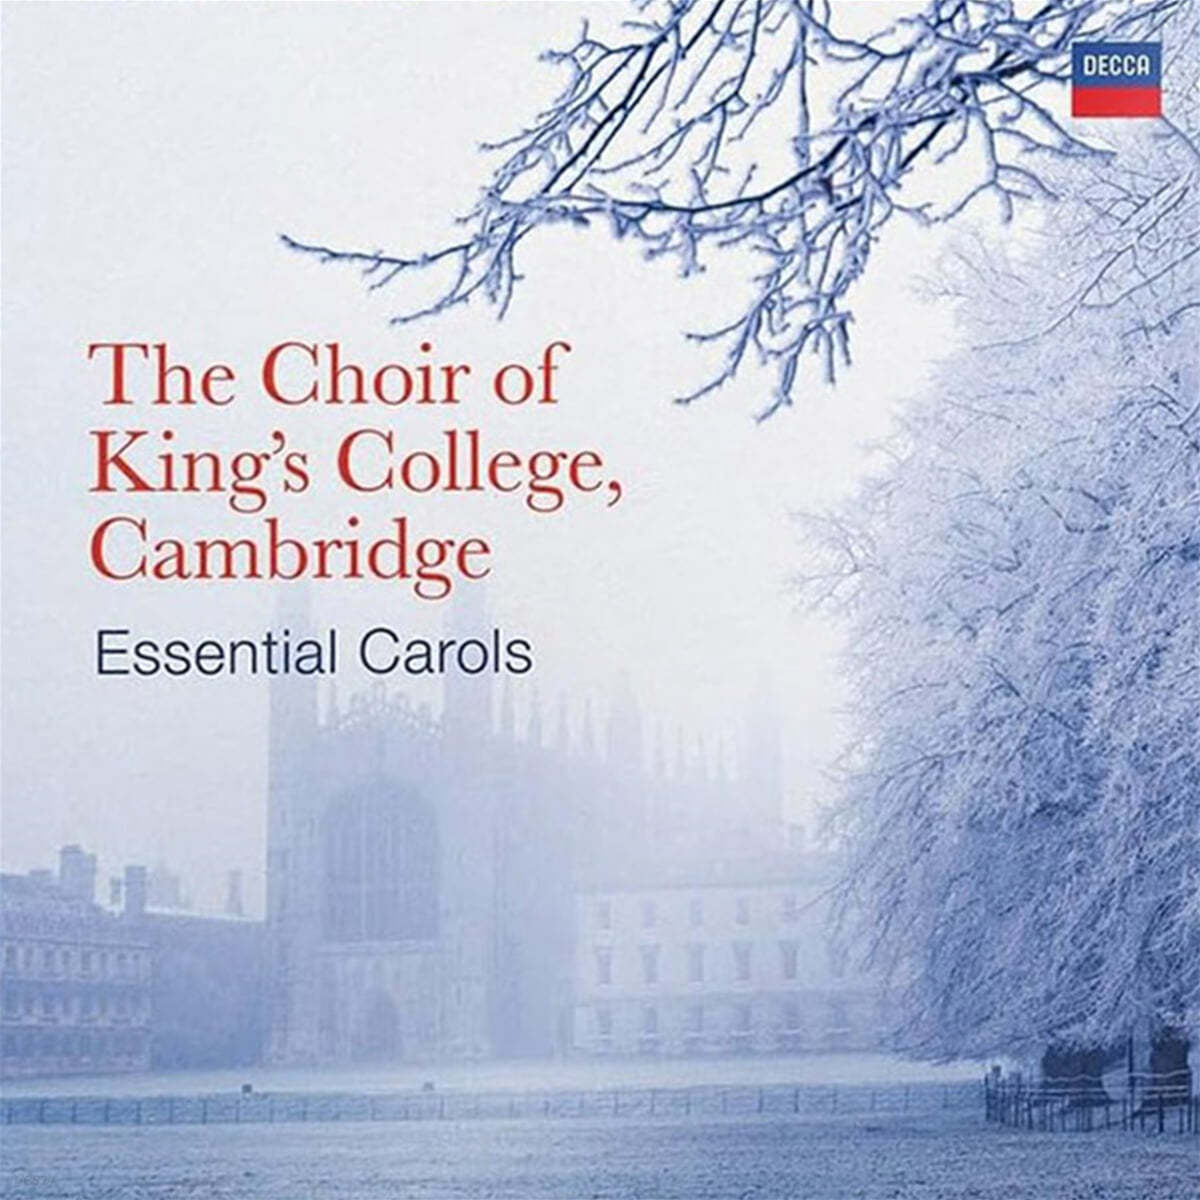 The Choir of King’s College, Cambridge 캠브리지 킹스 칼리지 합창단 캐럴 모음집 (Essential Carols) [블루 &amp; 화이트 컬러 LP]